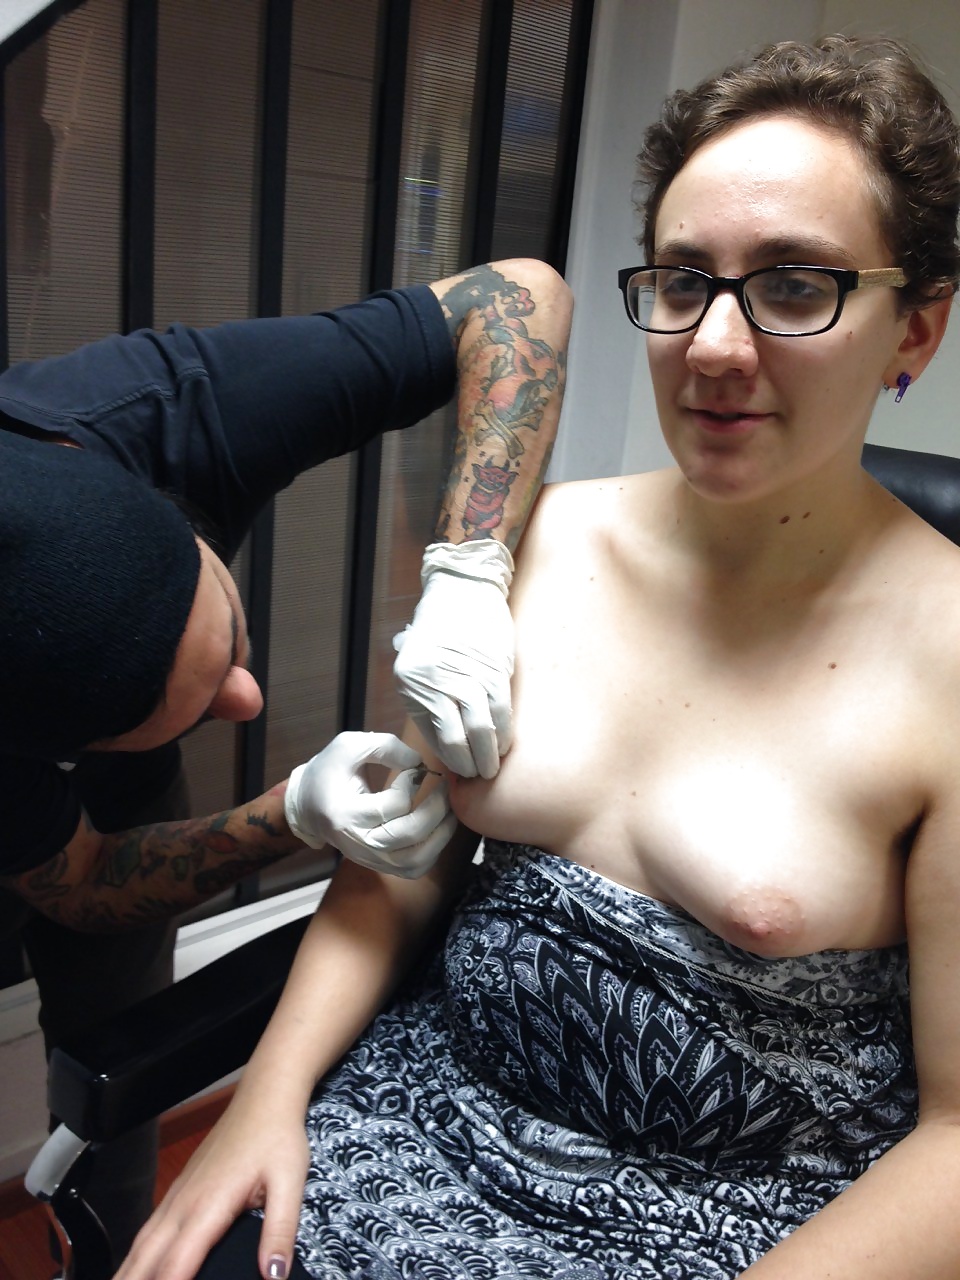 Short hair chick getting nipples pierced #41026486